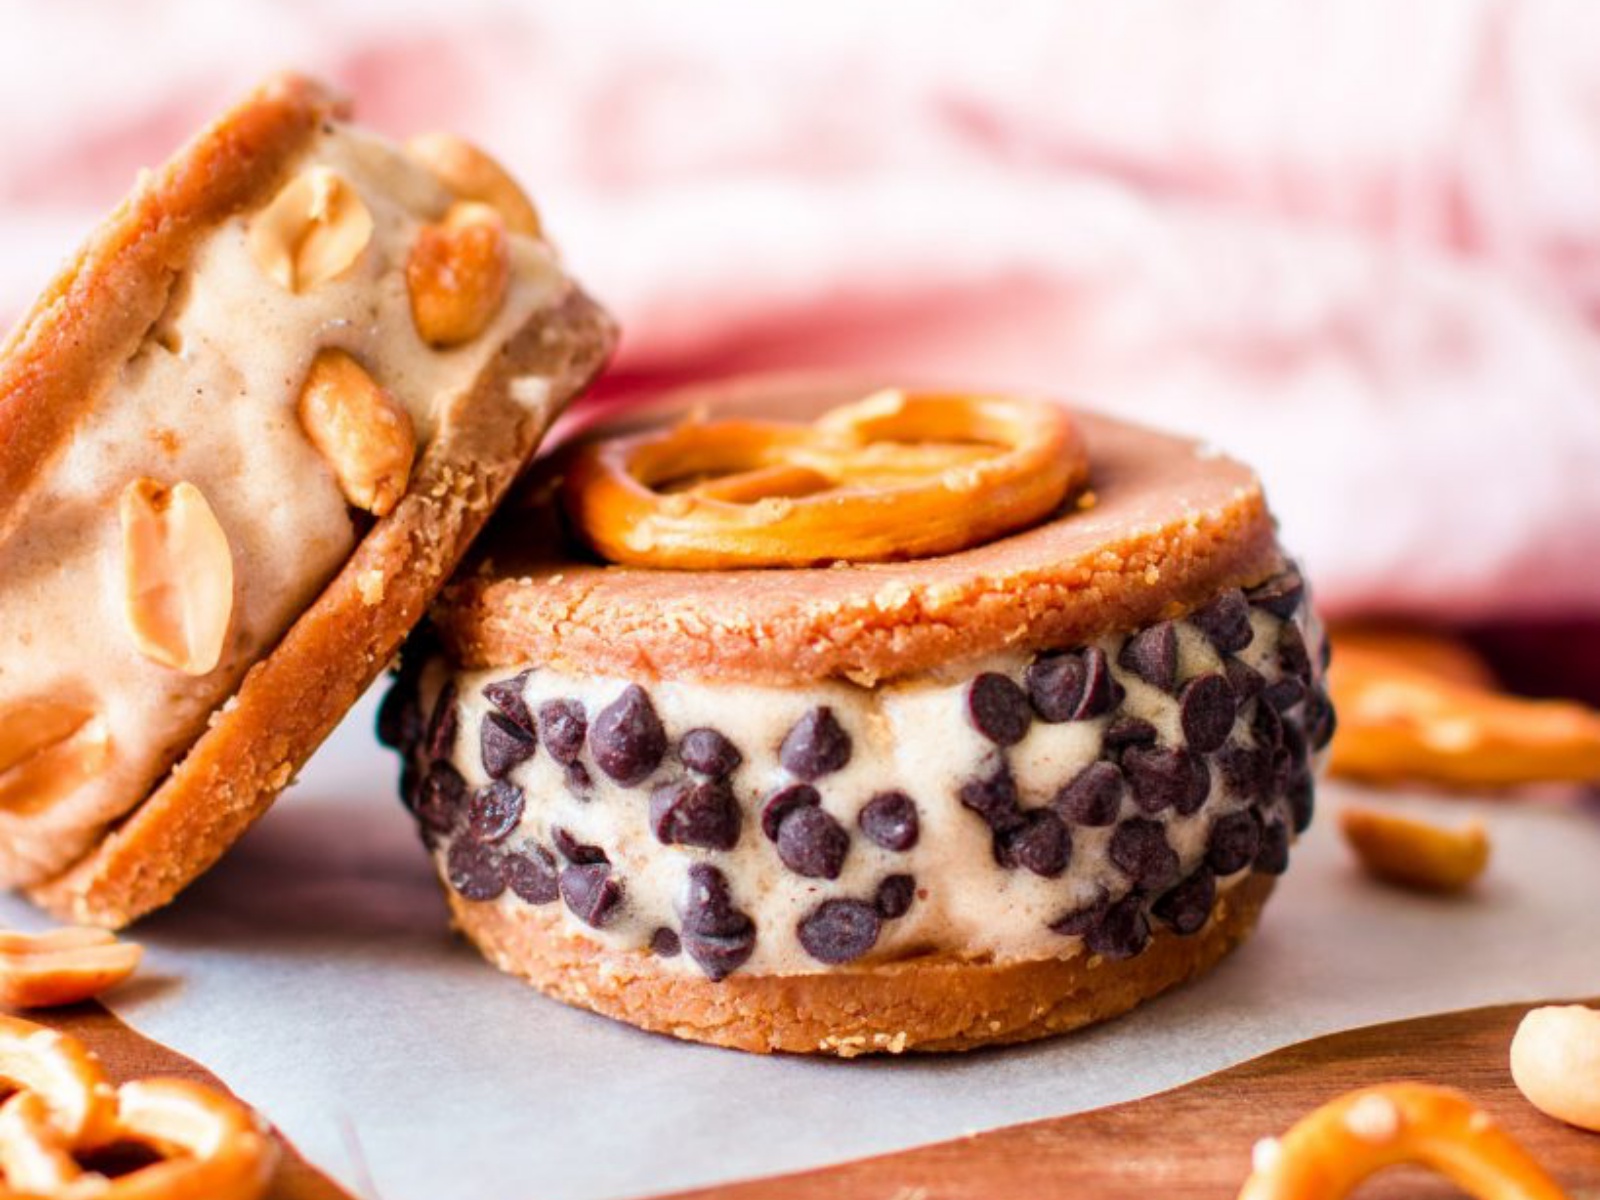 Vegan peanut butter pretzel ice cream sandwiches